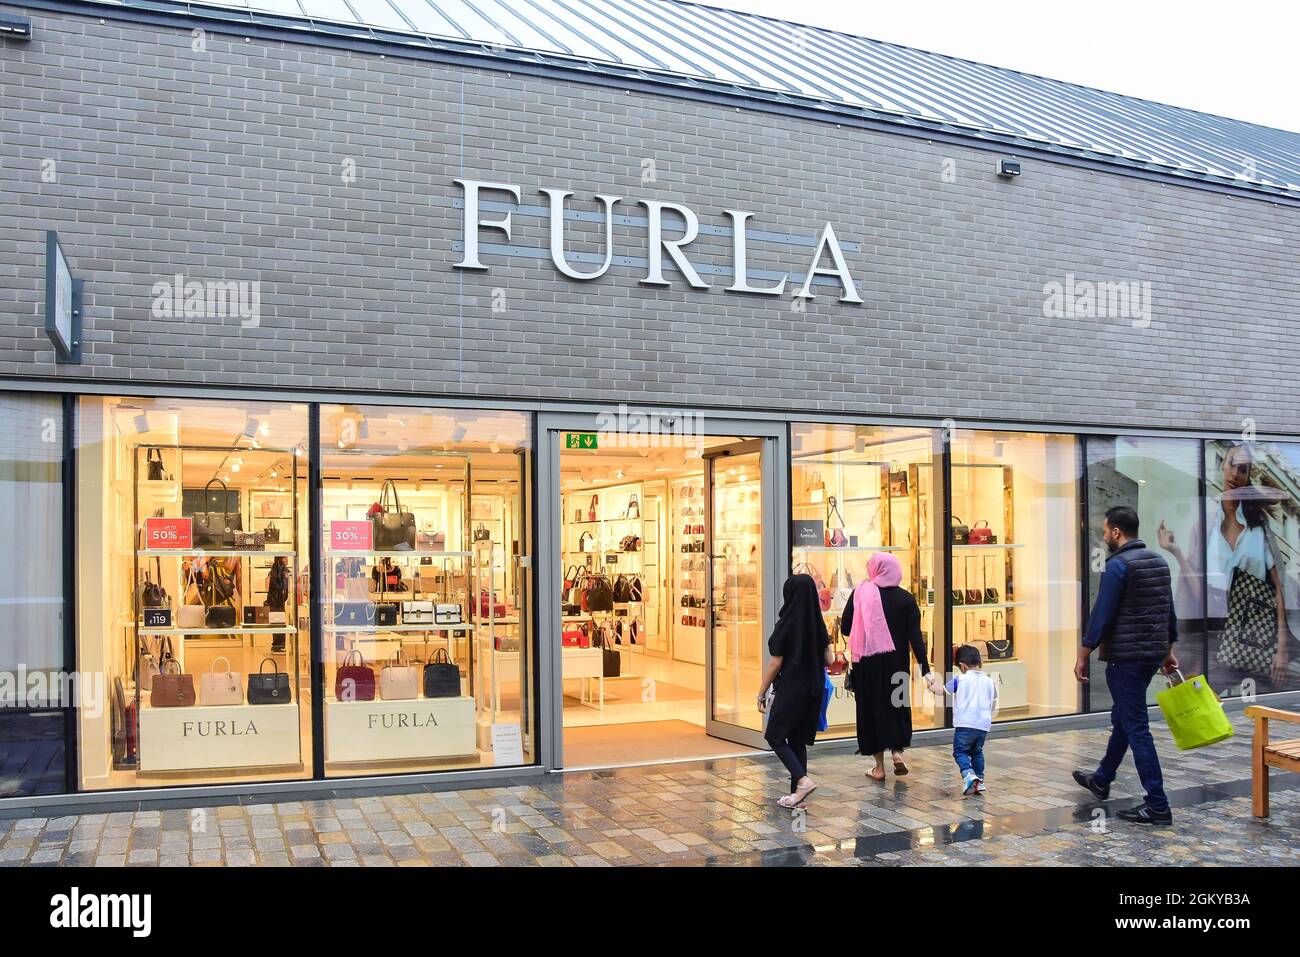 Tienda de lujo italiana Furla, Cheshire Oaks Designer Outlet, Kinsey Road, Wirral, Merseyside, Inglaterra, Reino Unido Foto de stock